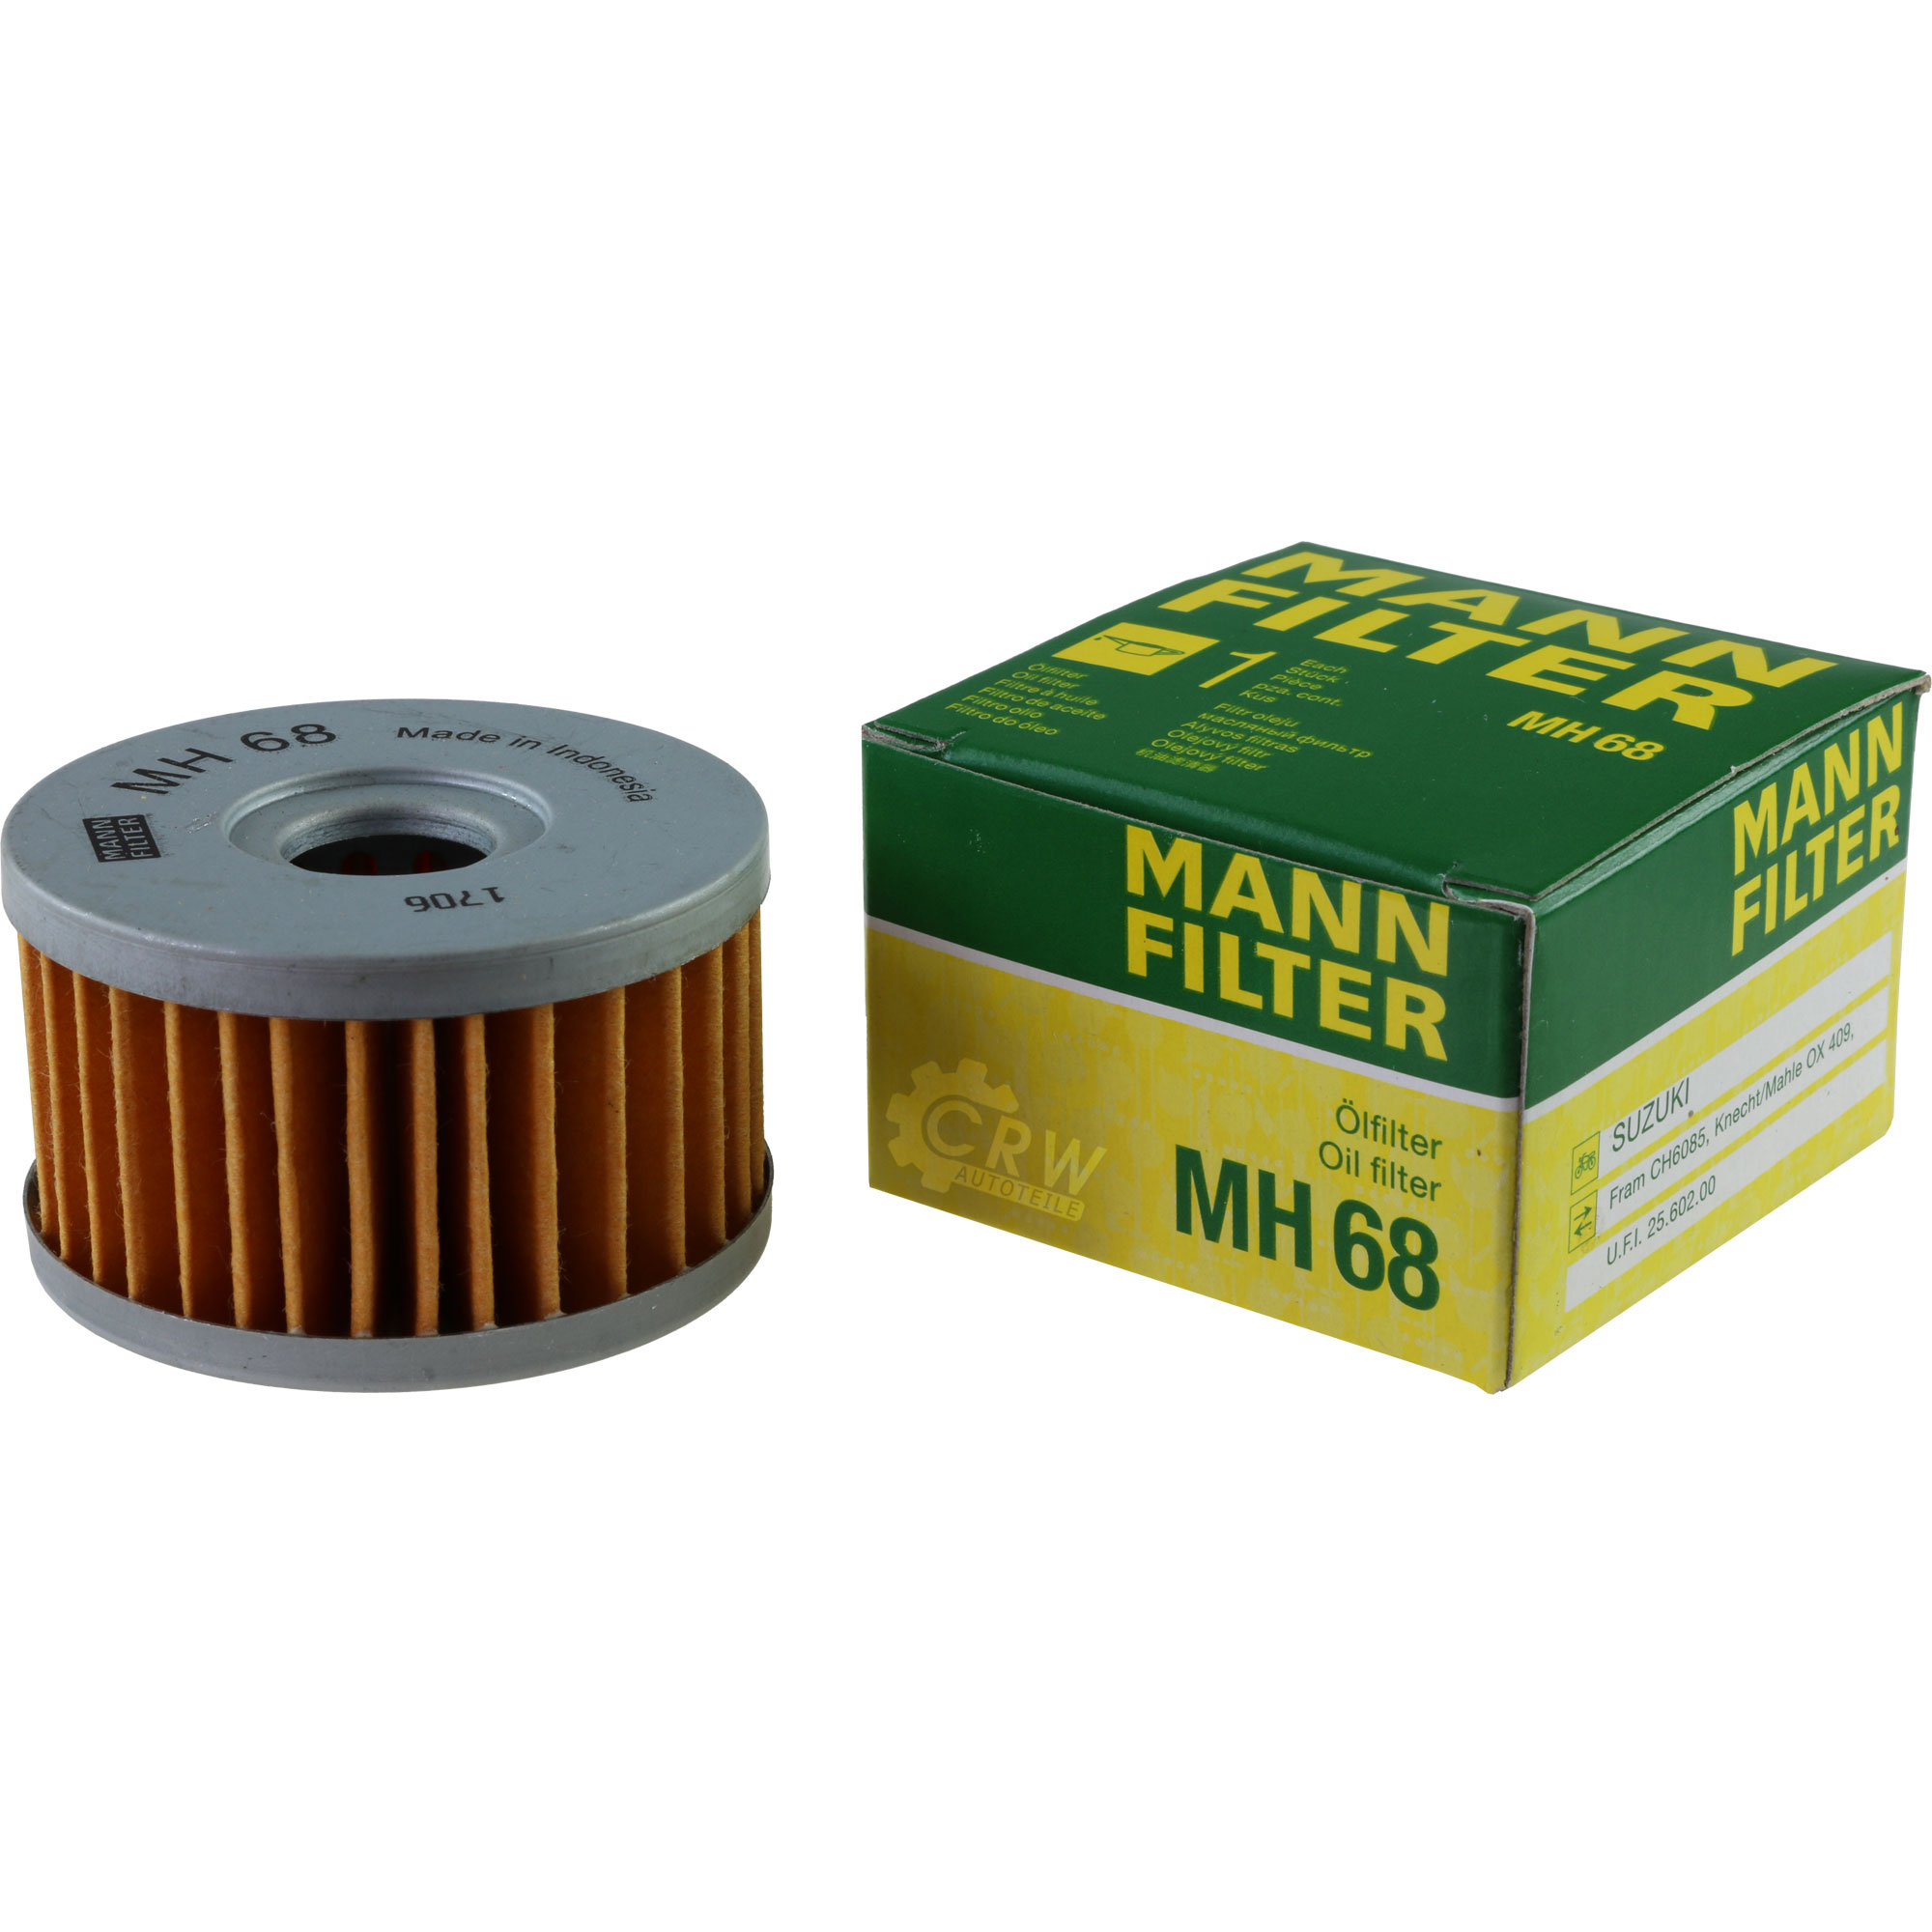 MANN-FILTER Ölfilter Oelfilter MH 68 Oil Filter